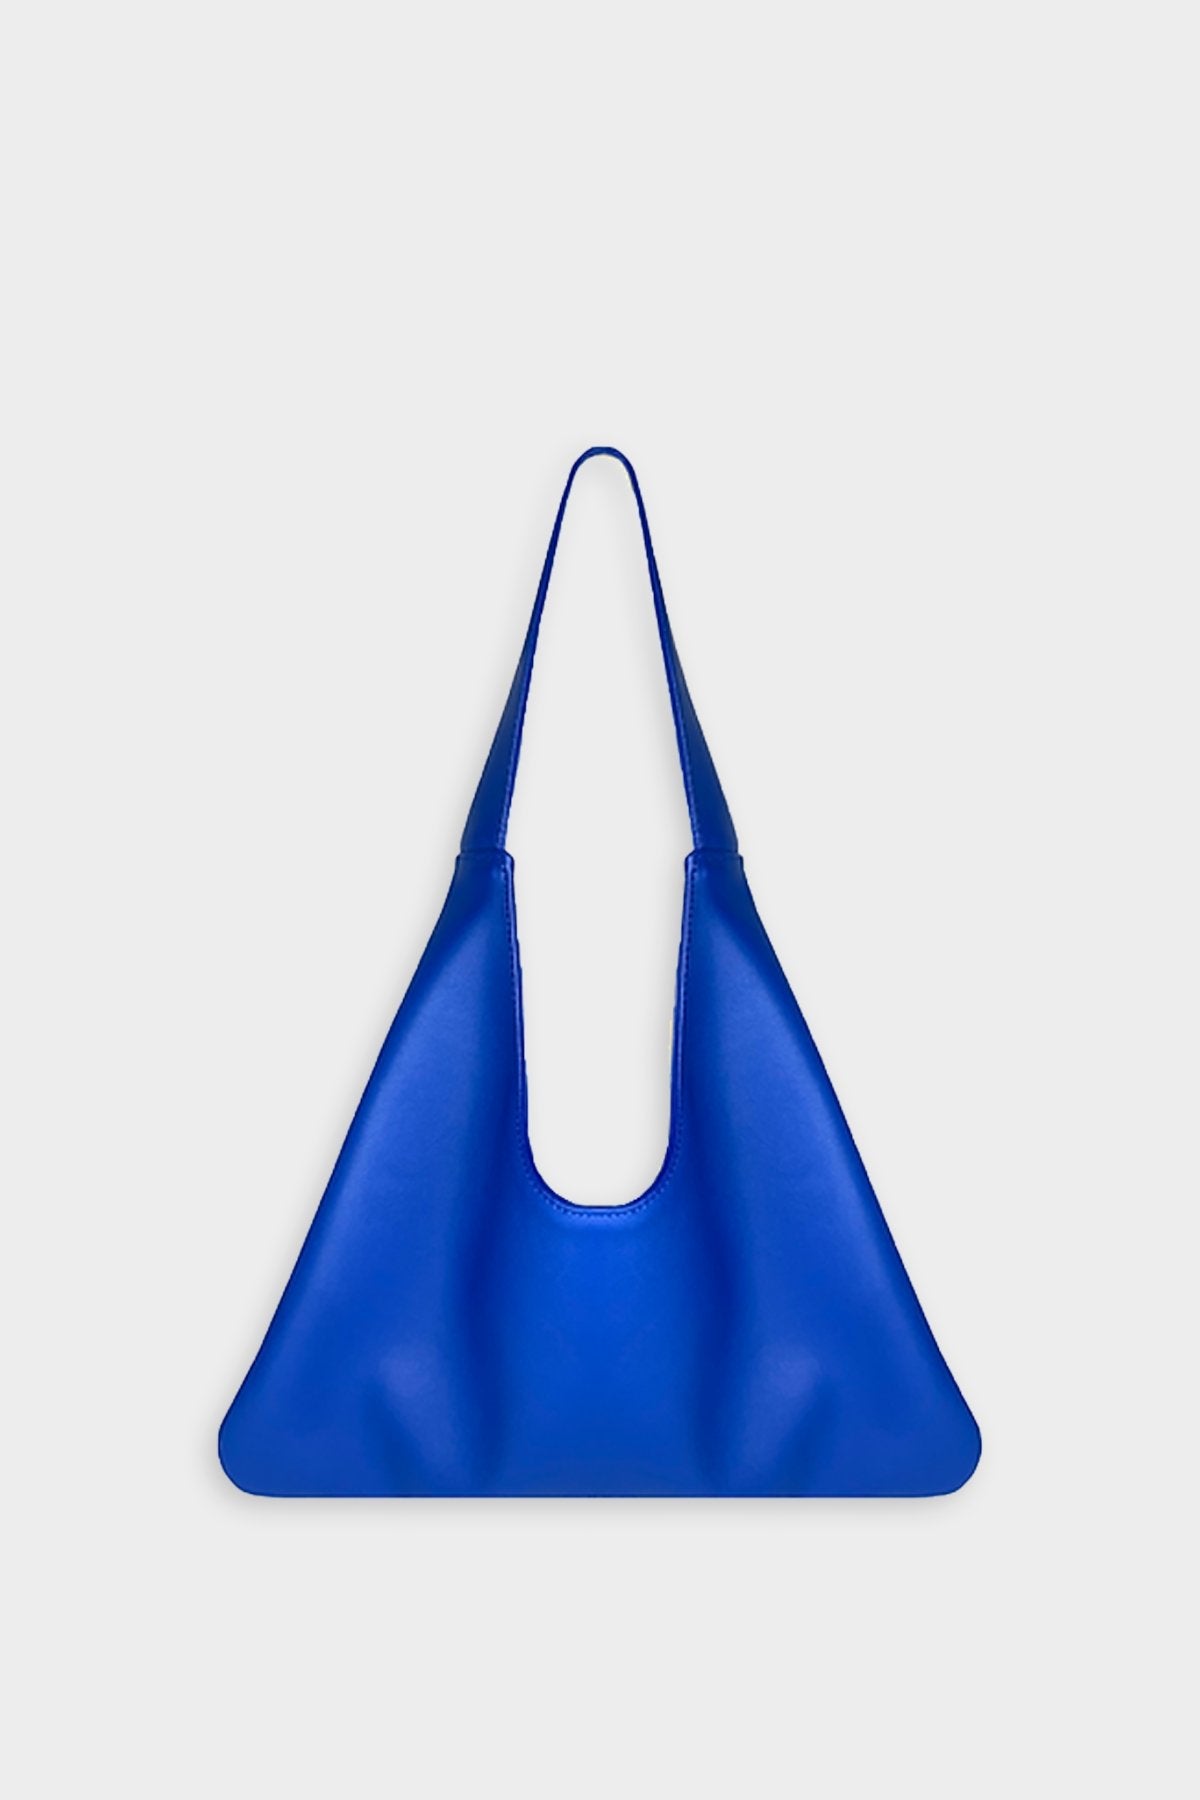 Agave Triangular Tote Bag in Electric Blue - shop-olivia.com